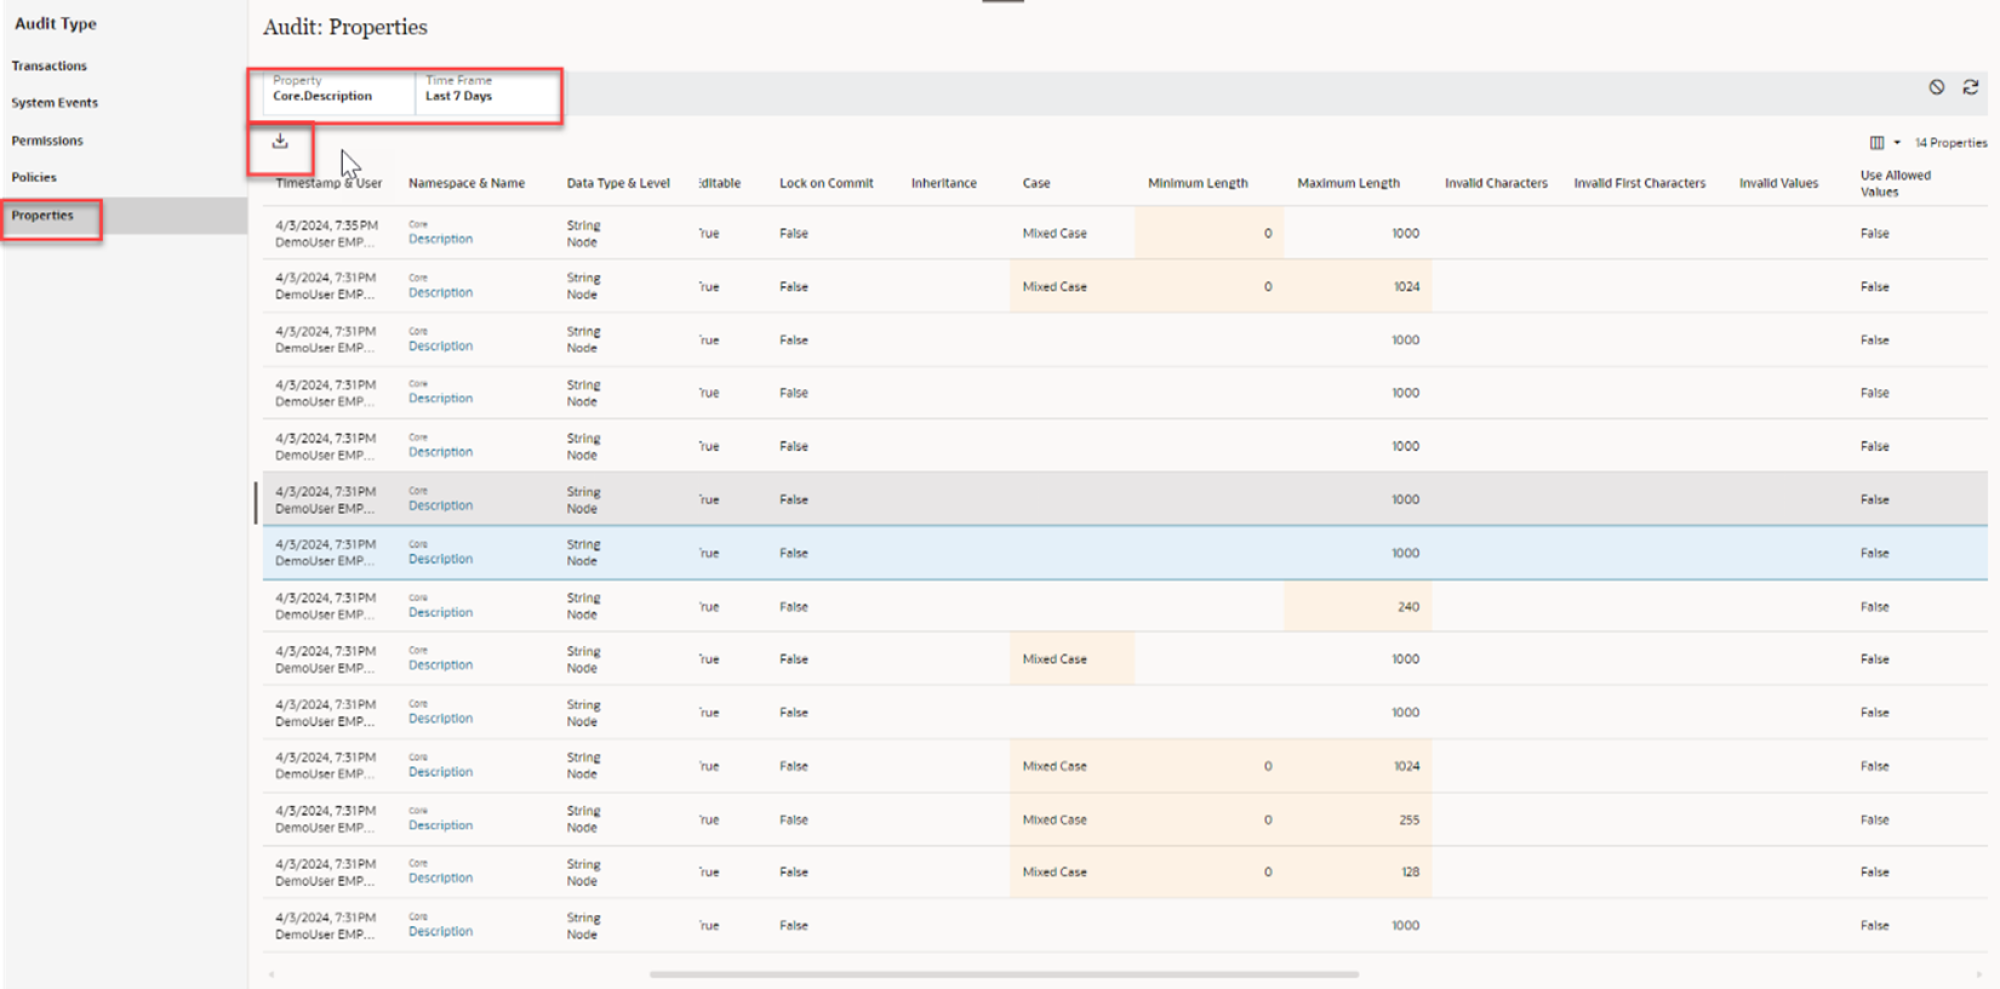 screenshot of Oracle EDM platform showing the audit properties screen